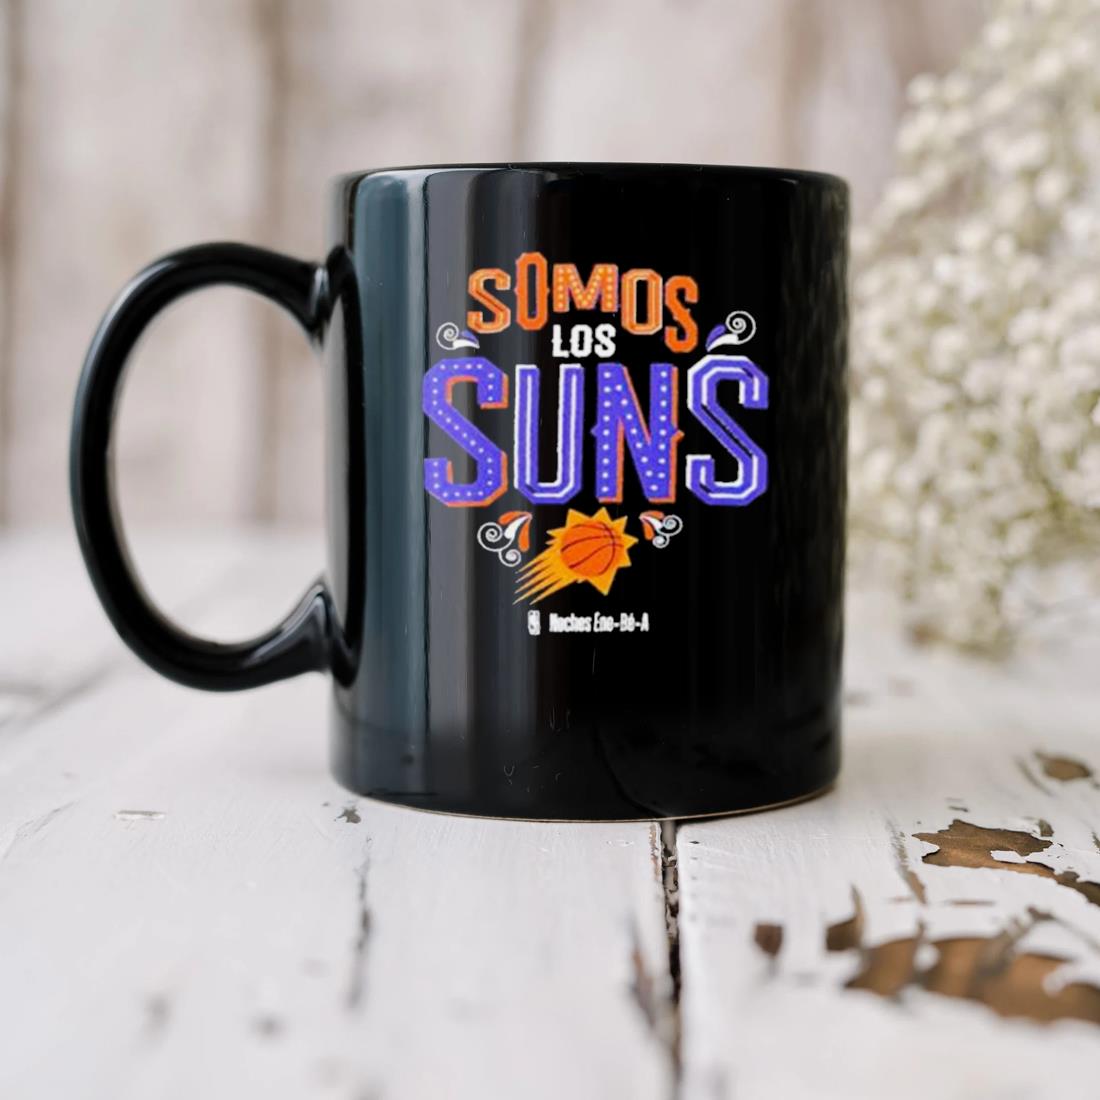 Somos Los Phoenix Suns Noches Ene-be-a Mug